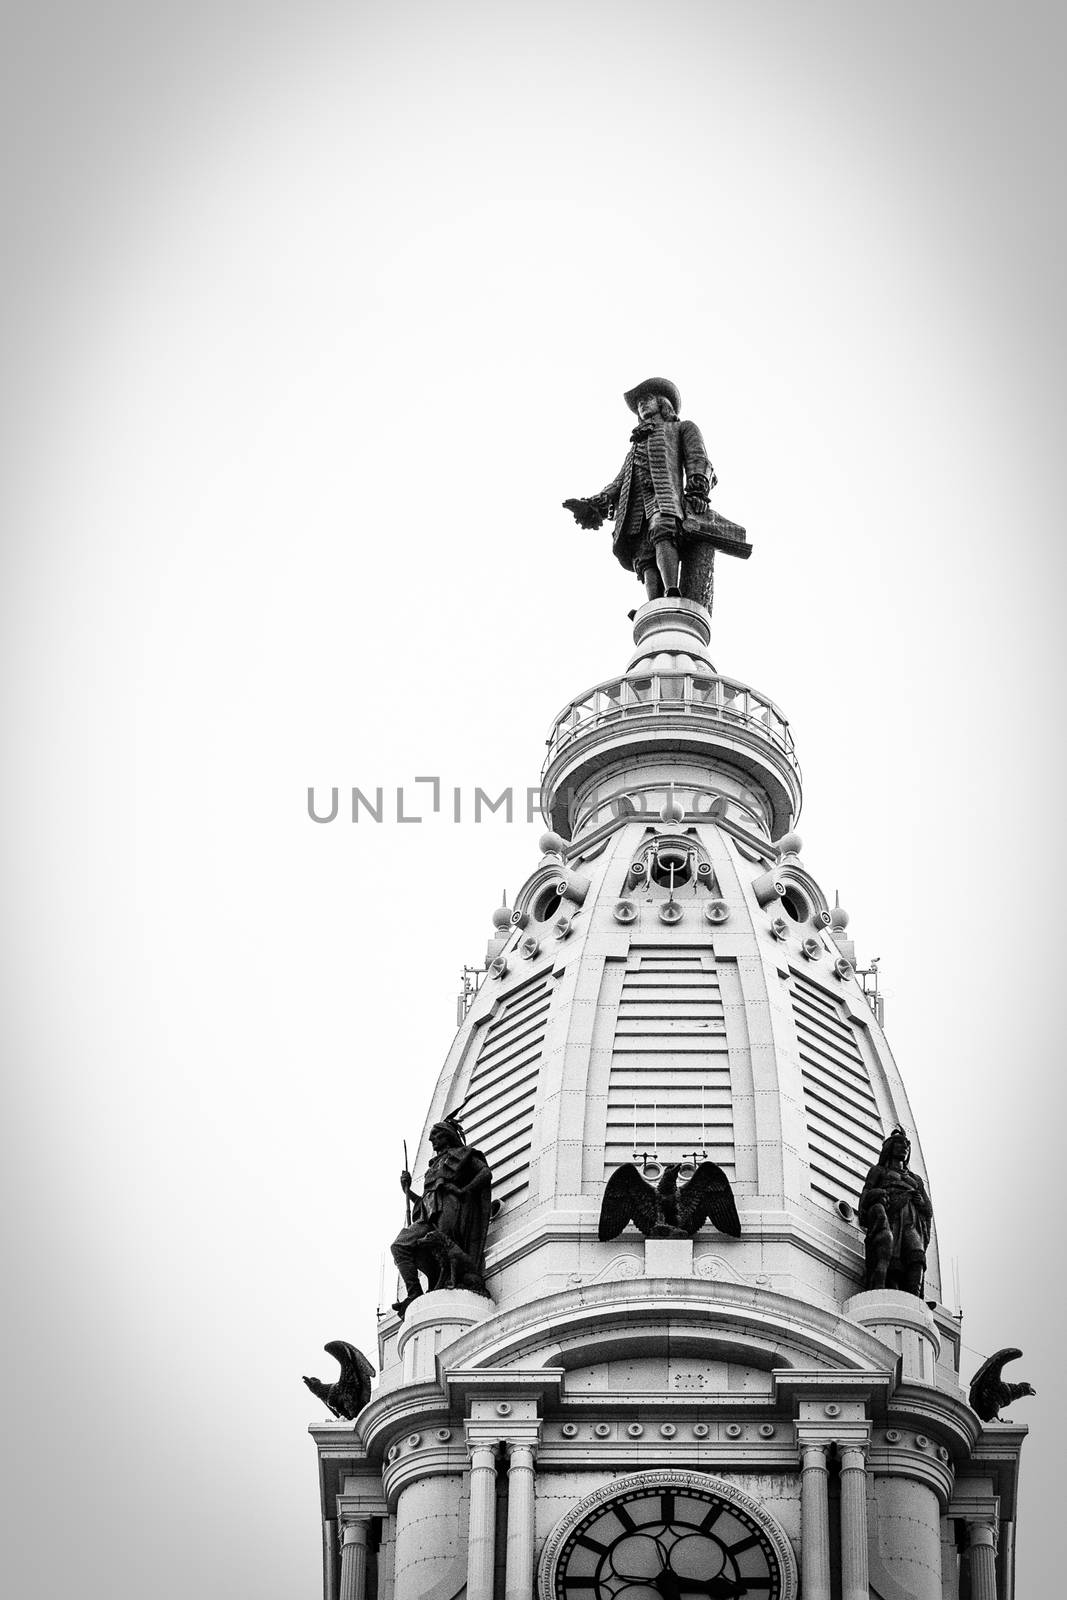 City Hall of Philadelphia by CelsoDiniz